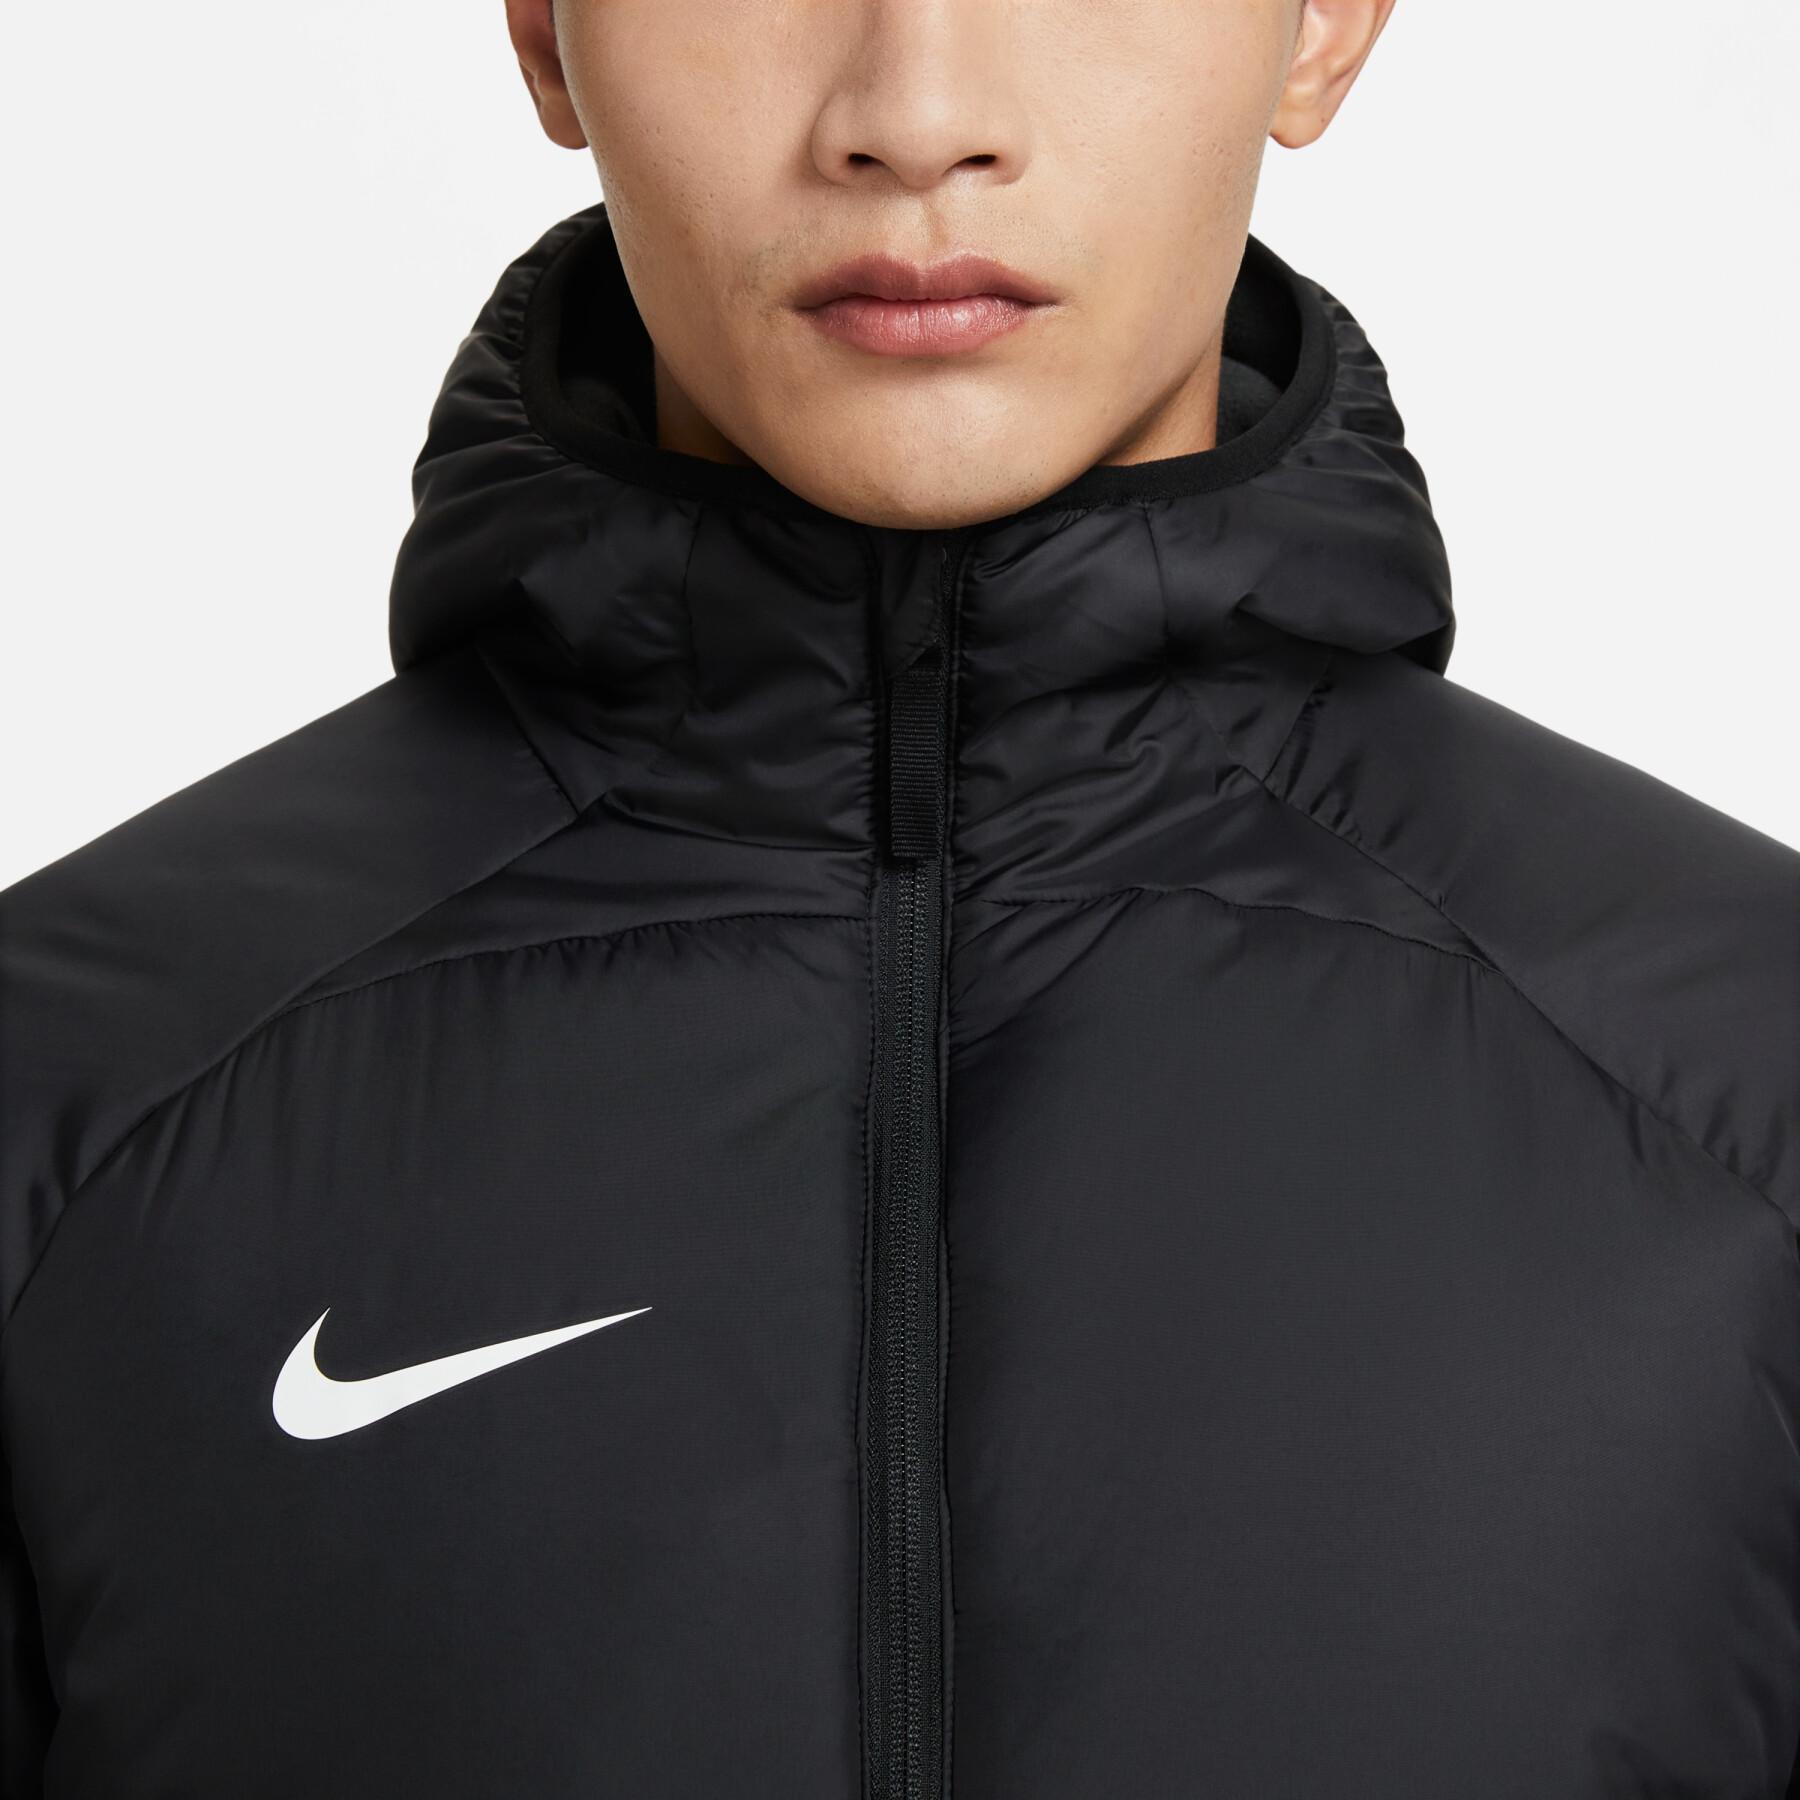 Sweat jacket Nike TF Academy Pro - Nike - Training Tops - Teamwear